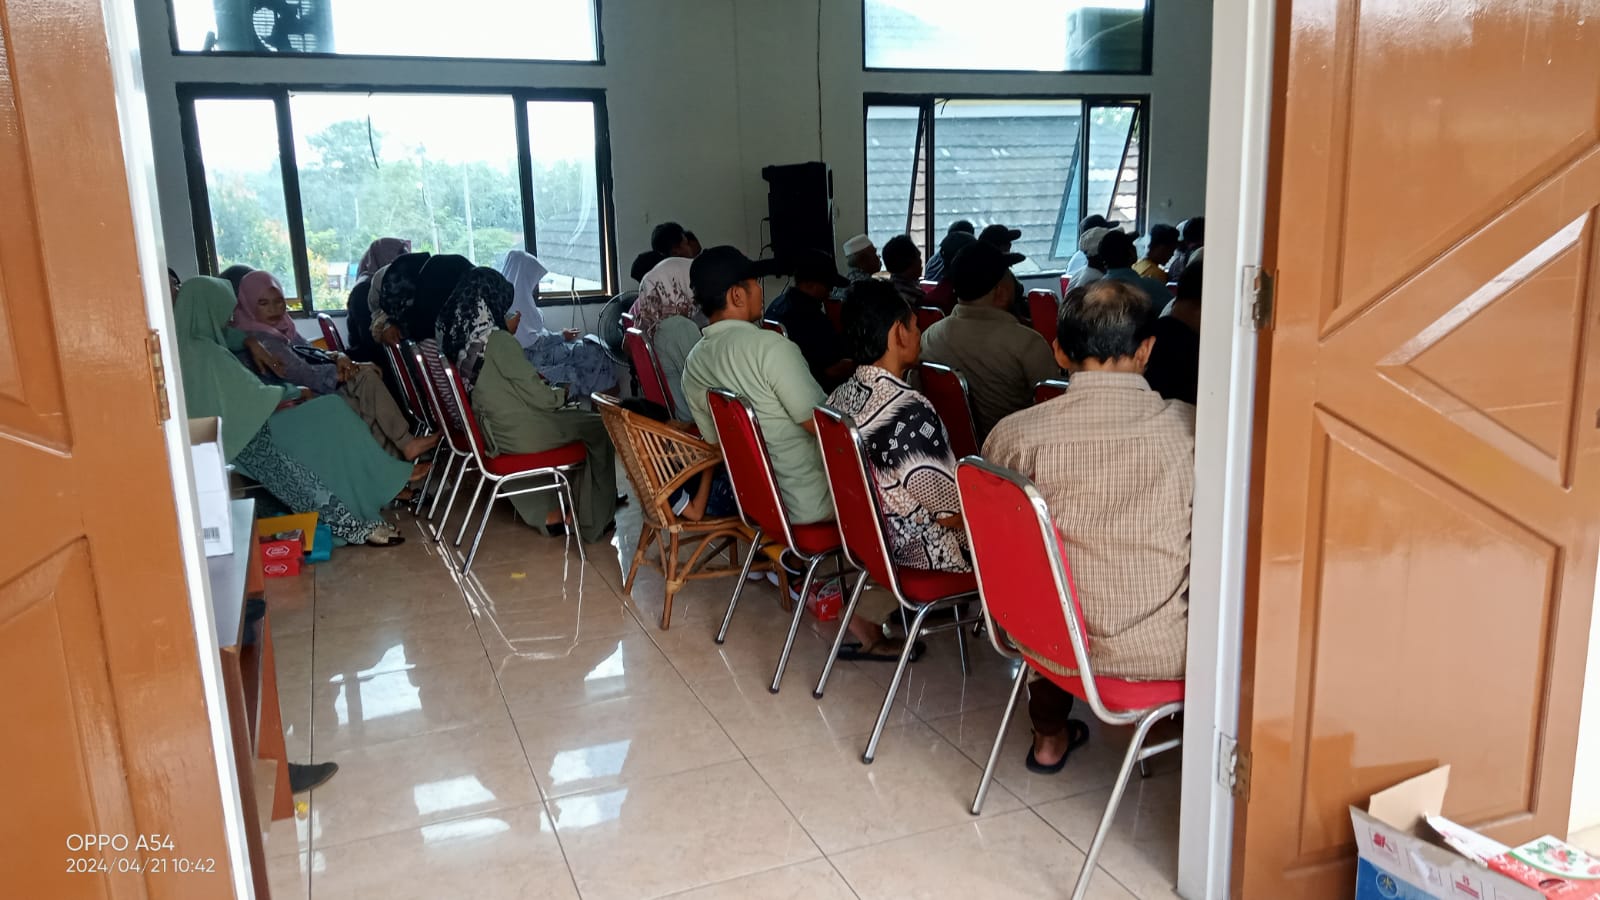 Kantor DPRD Tebo, Di Datangi Buruh Sebanyak 231 Orang, Meminta Pertolongan, PT. TEPIL Tidak Bayar Dana kompensasi Yang Telah Di Janjikan